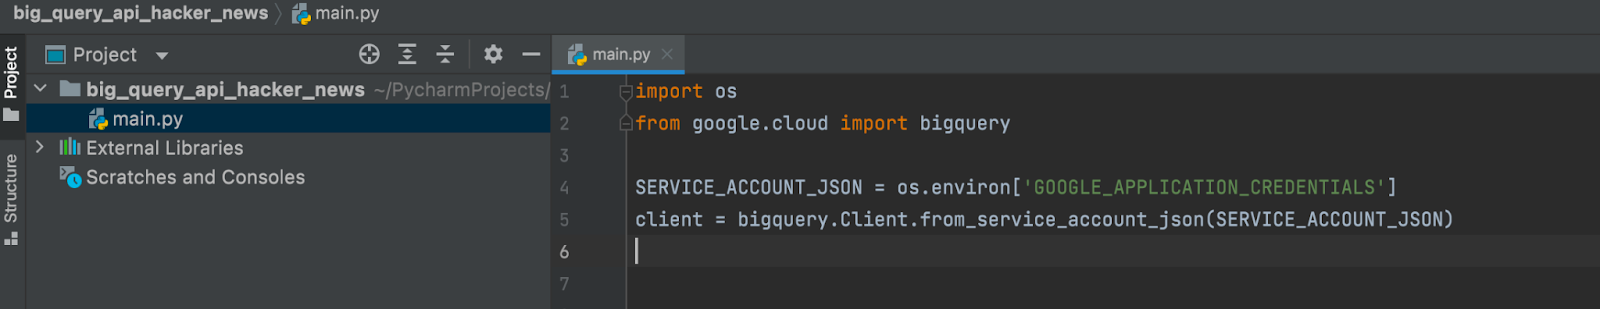 Input service account API key in code editor